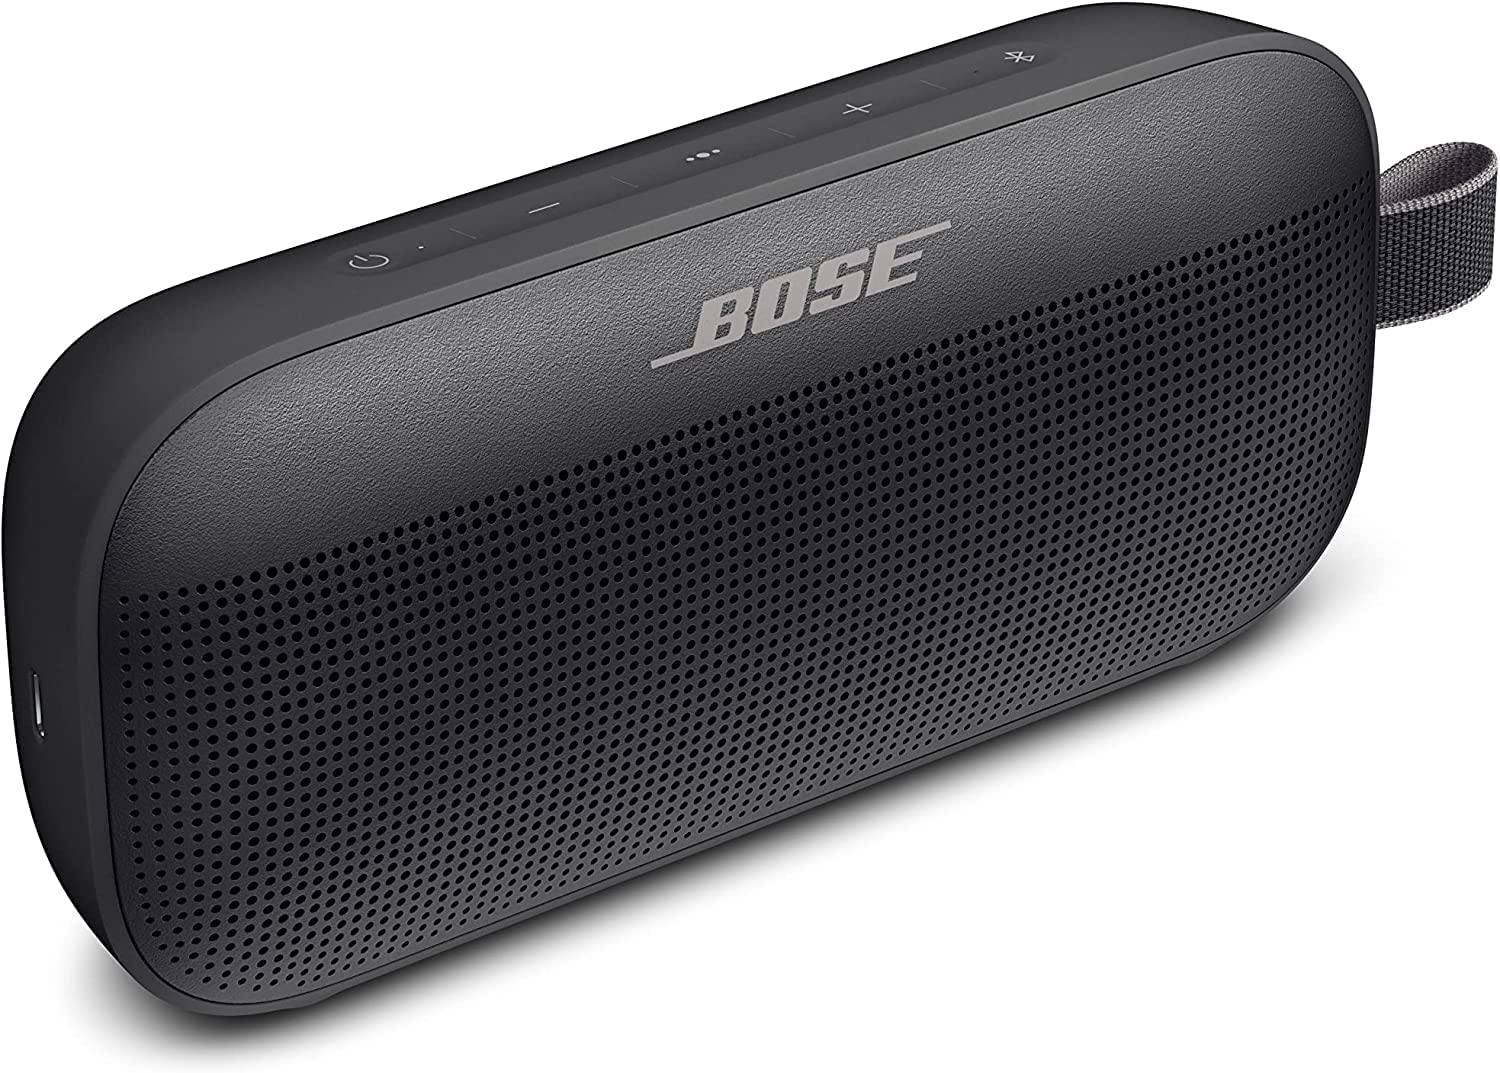 Billedhugger dreng Playful Deal Alert! Bose Portable Bluetooth Speakers Are on Sale! | Cord Cutters  News